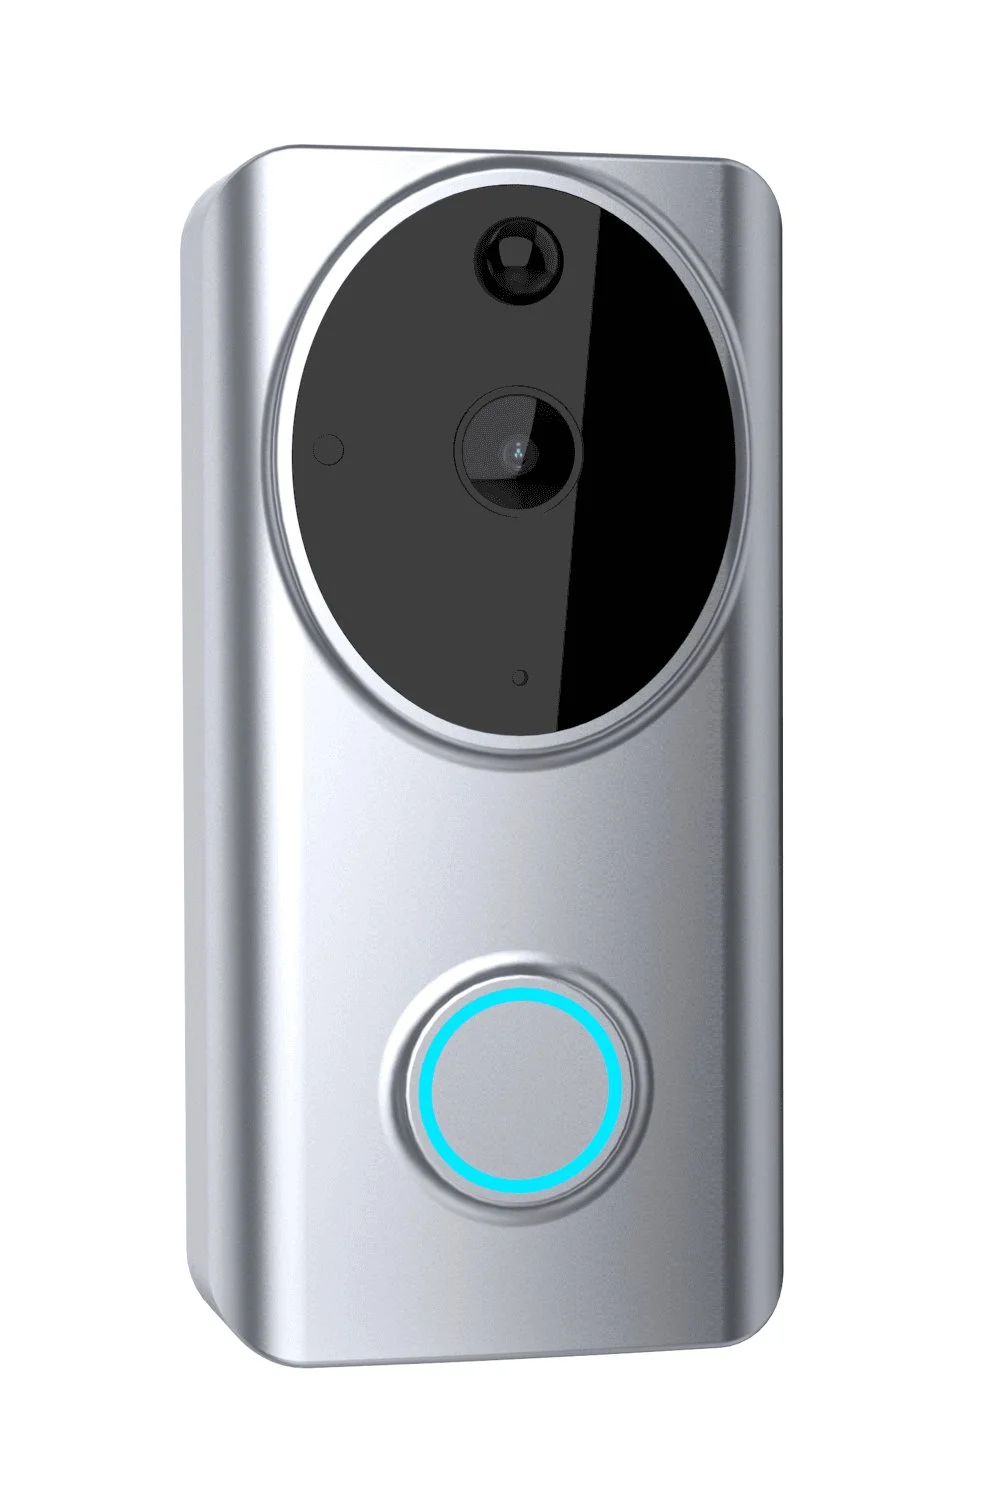 Woox видеозвънец с двупосочно аудио Doorbell - R4957 - Smart WiFi Video Doorbell and Chime - image 2